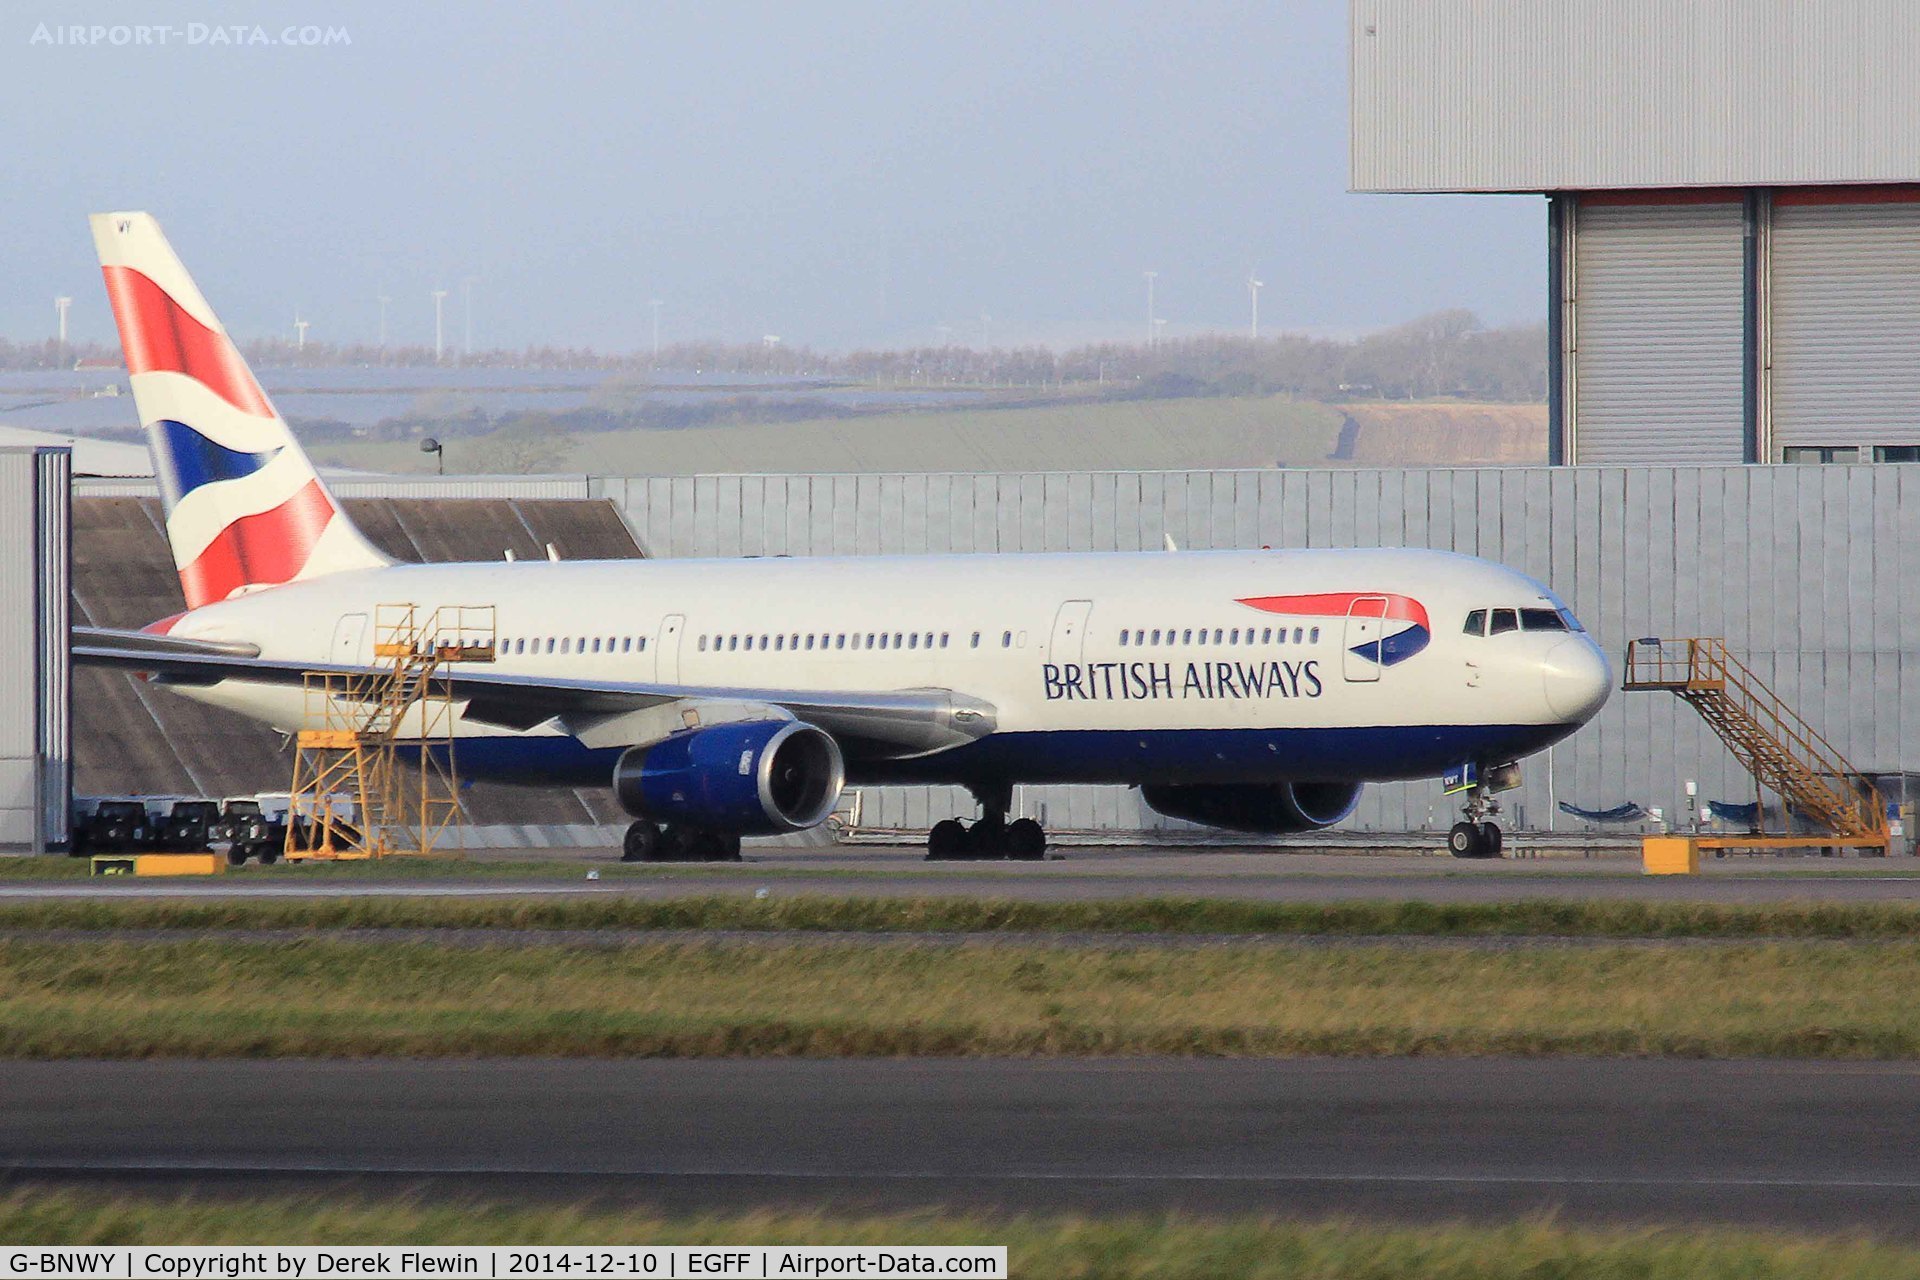 G-BNWY, 1996 Boeing 767-336 C/N 25834, 767-336, London Heathrow based, previously N5005C, seen at the British Airways Maintenance Centre at EGFF.